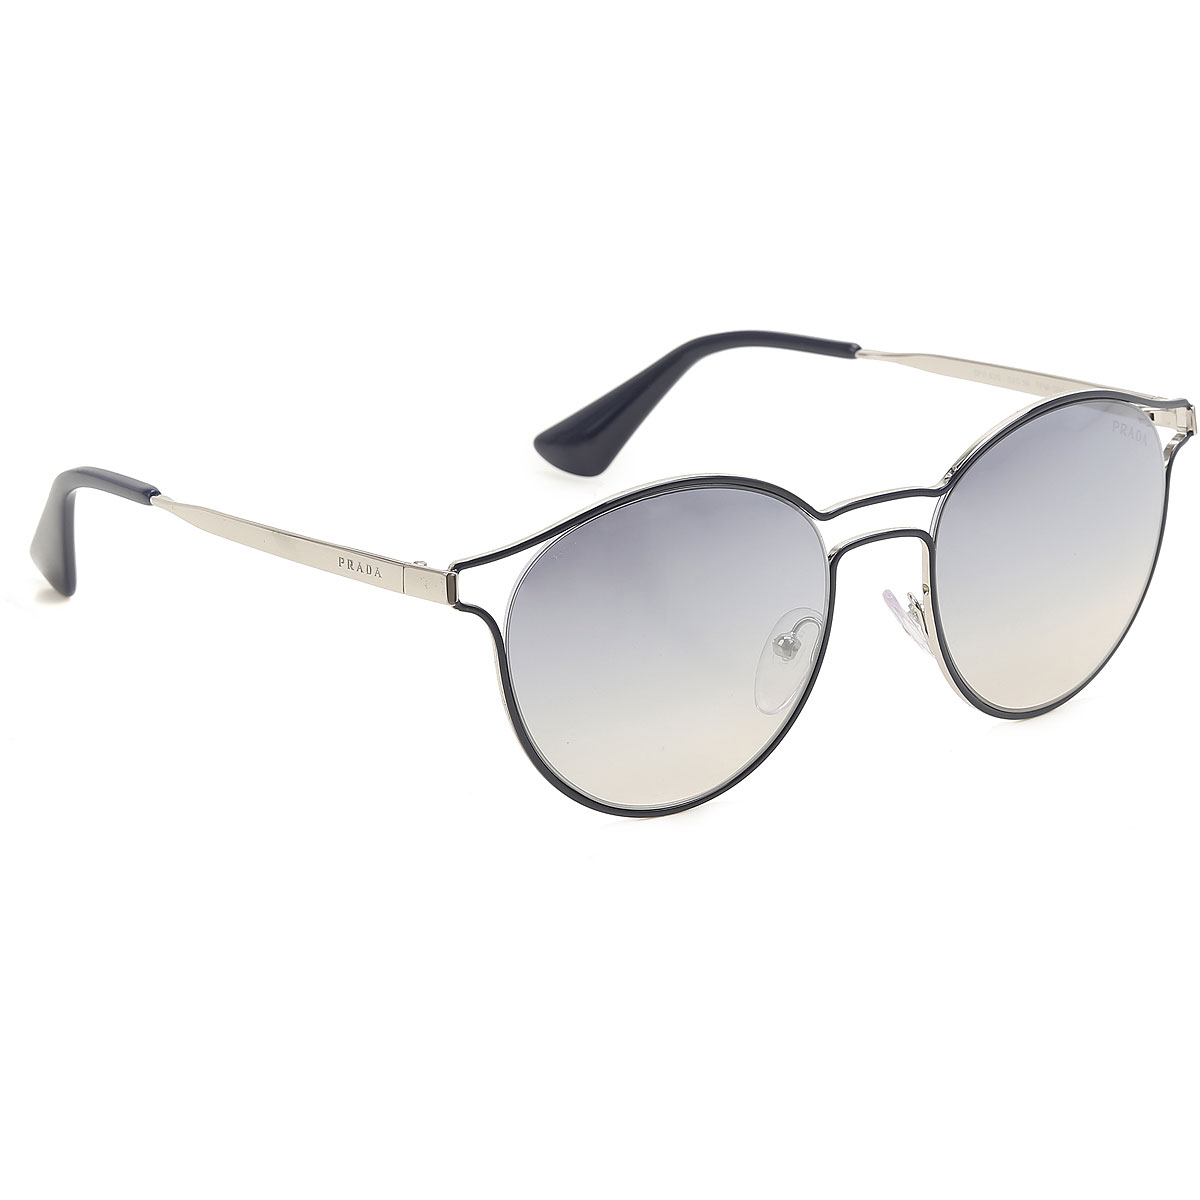 Sunglasses Prada, Style code: spr62s 